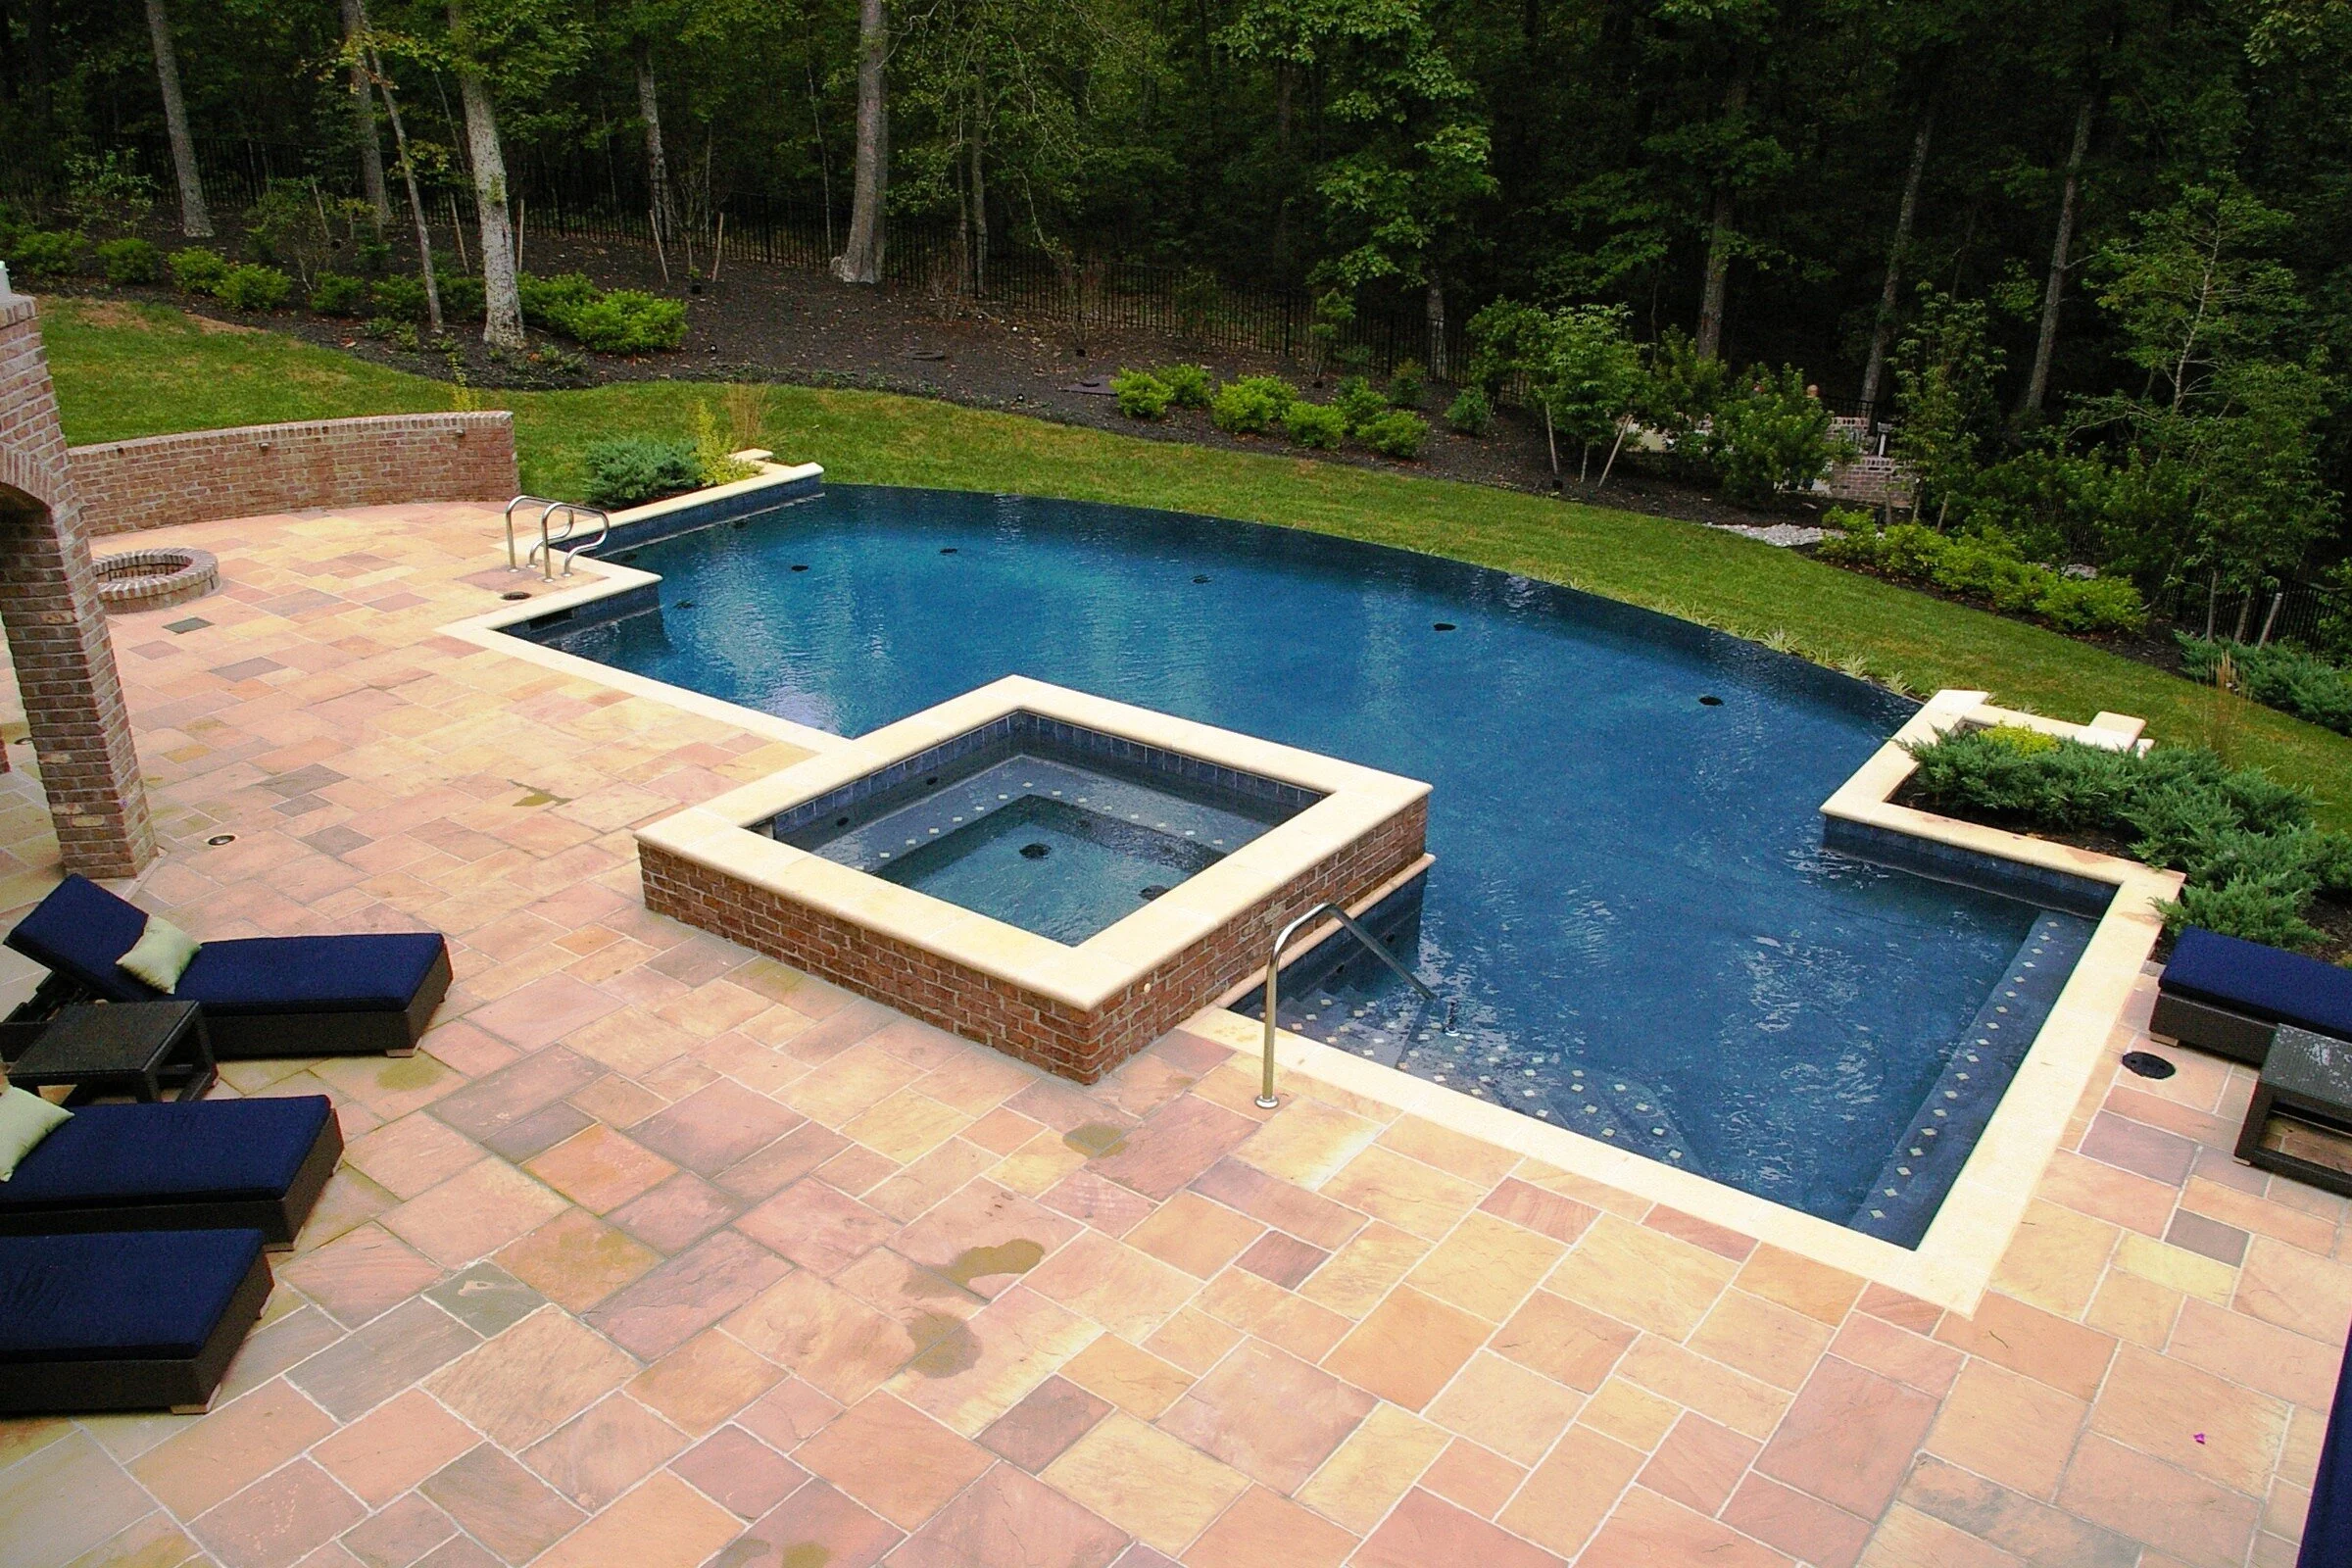 Swimming Pool Design Amazing With Bedroom Interior Within Swimming Pool Design For Home